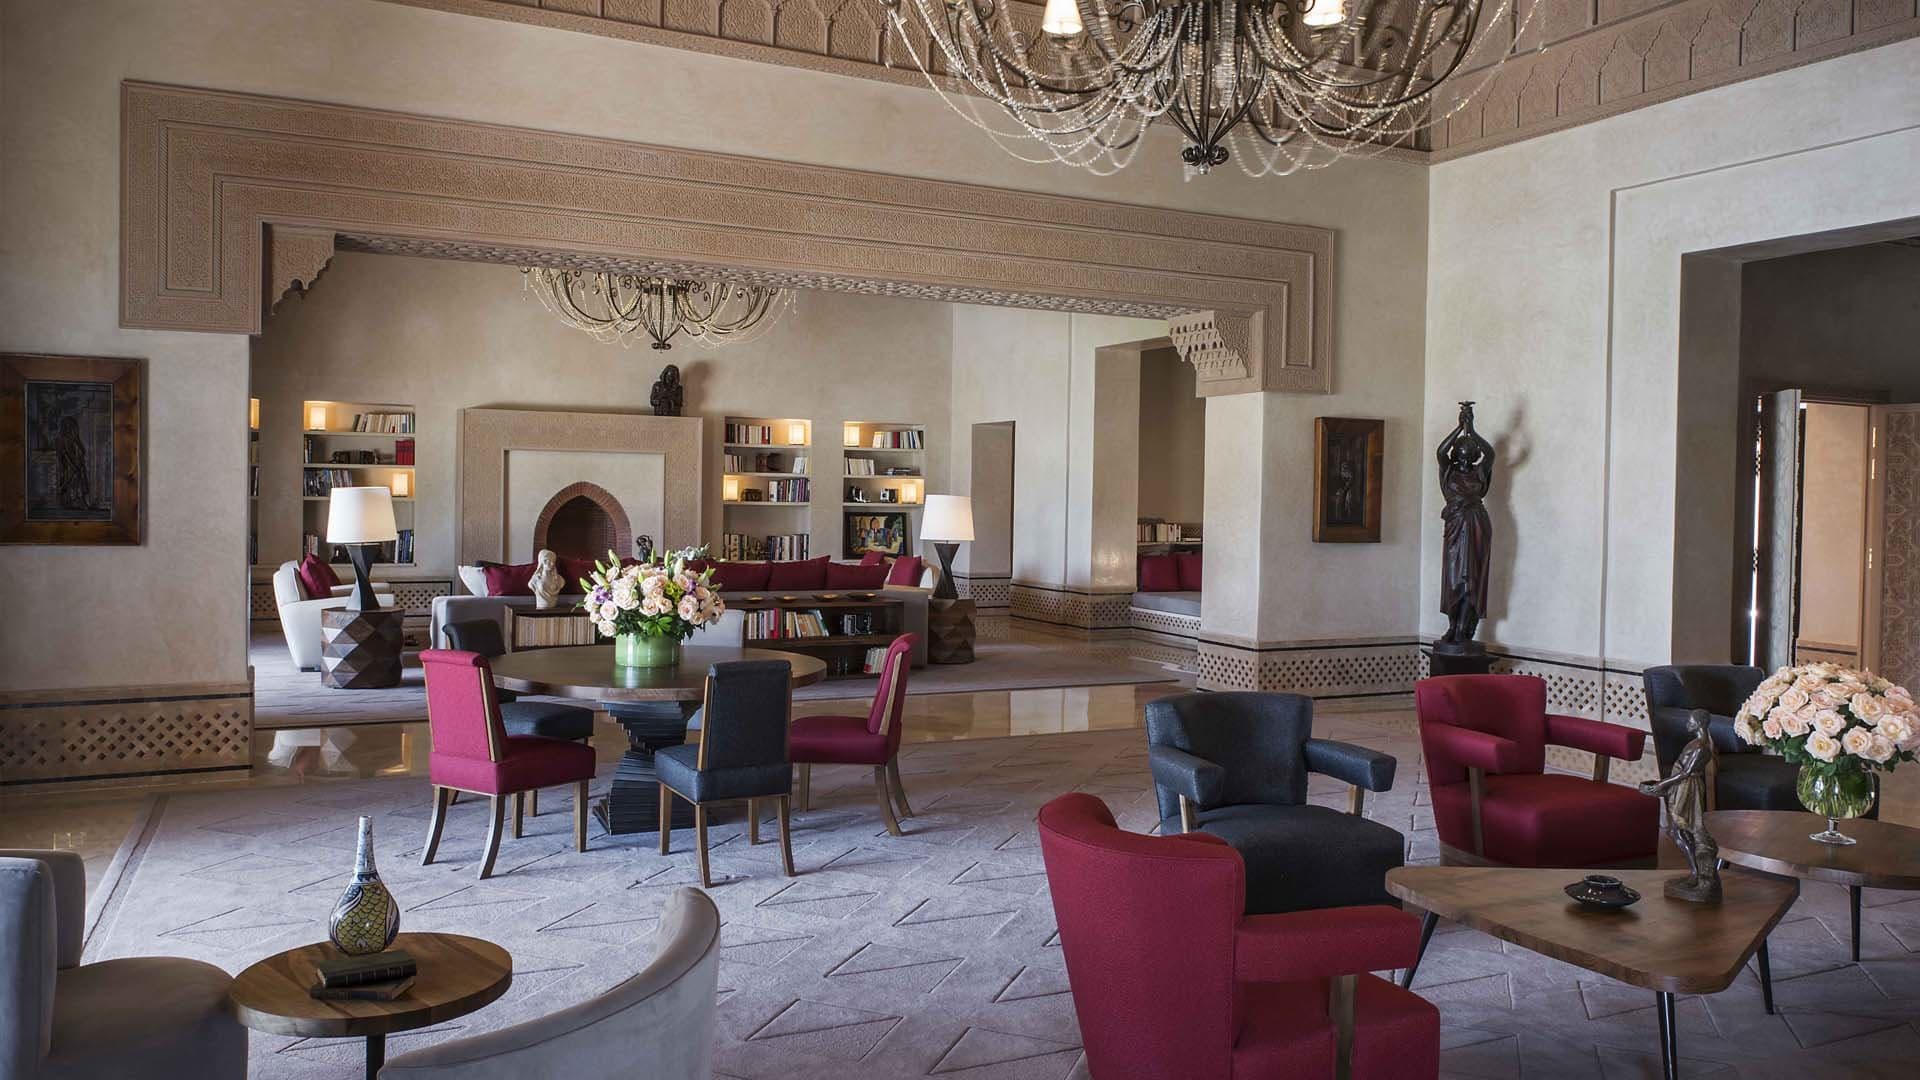 10 Bedroom Villa For Sale Marrakech Lp08720 1ec625dc2c6f0800.jpg